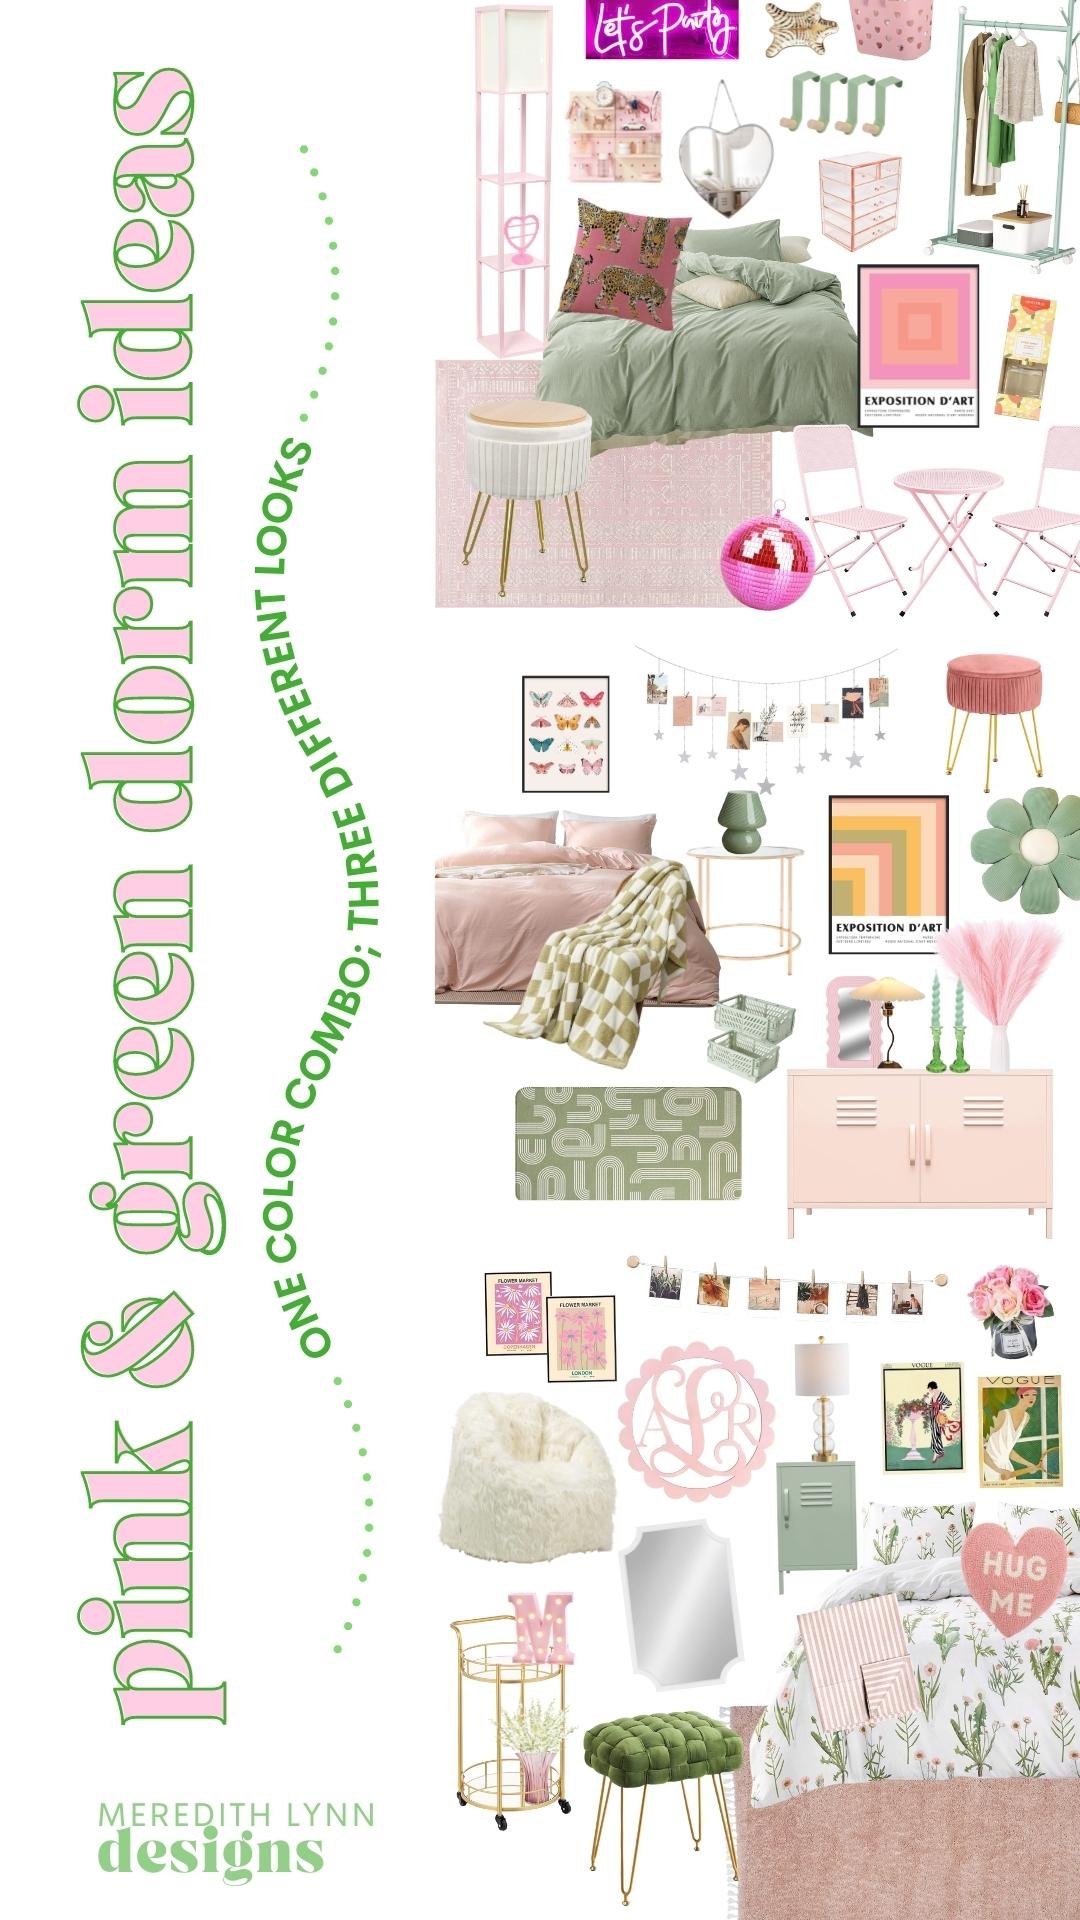 https://images.squarespace-cdn.com/content/v1/59db71a7f5e231512a1dcba0/37491253-422d-40b2-84df-049812f81c55/pink-green-dorm-decor-ideas-aesthetic-trendy.jpg